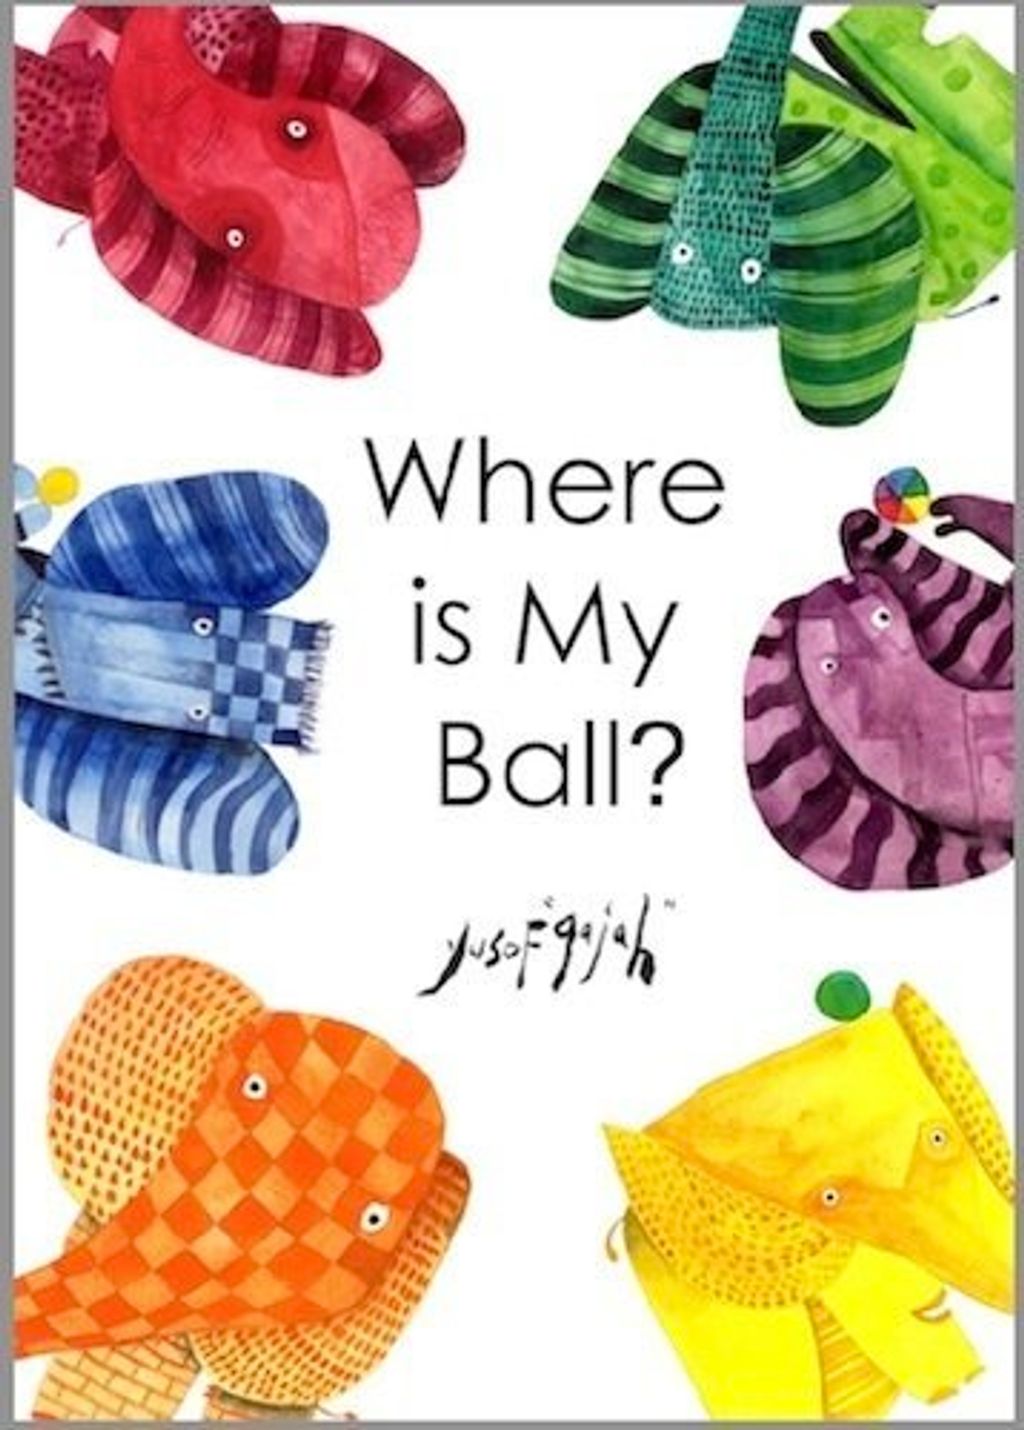 Where is My Ball cover.jpg